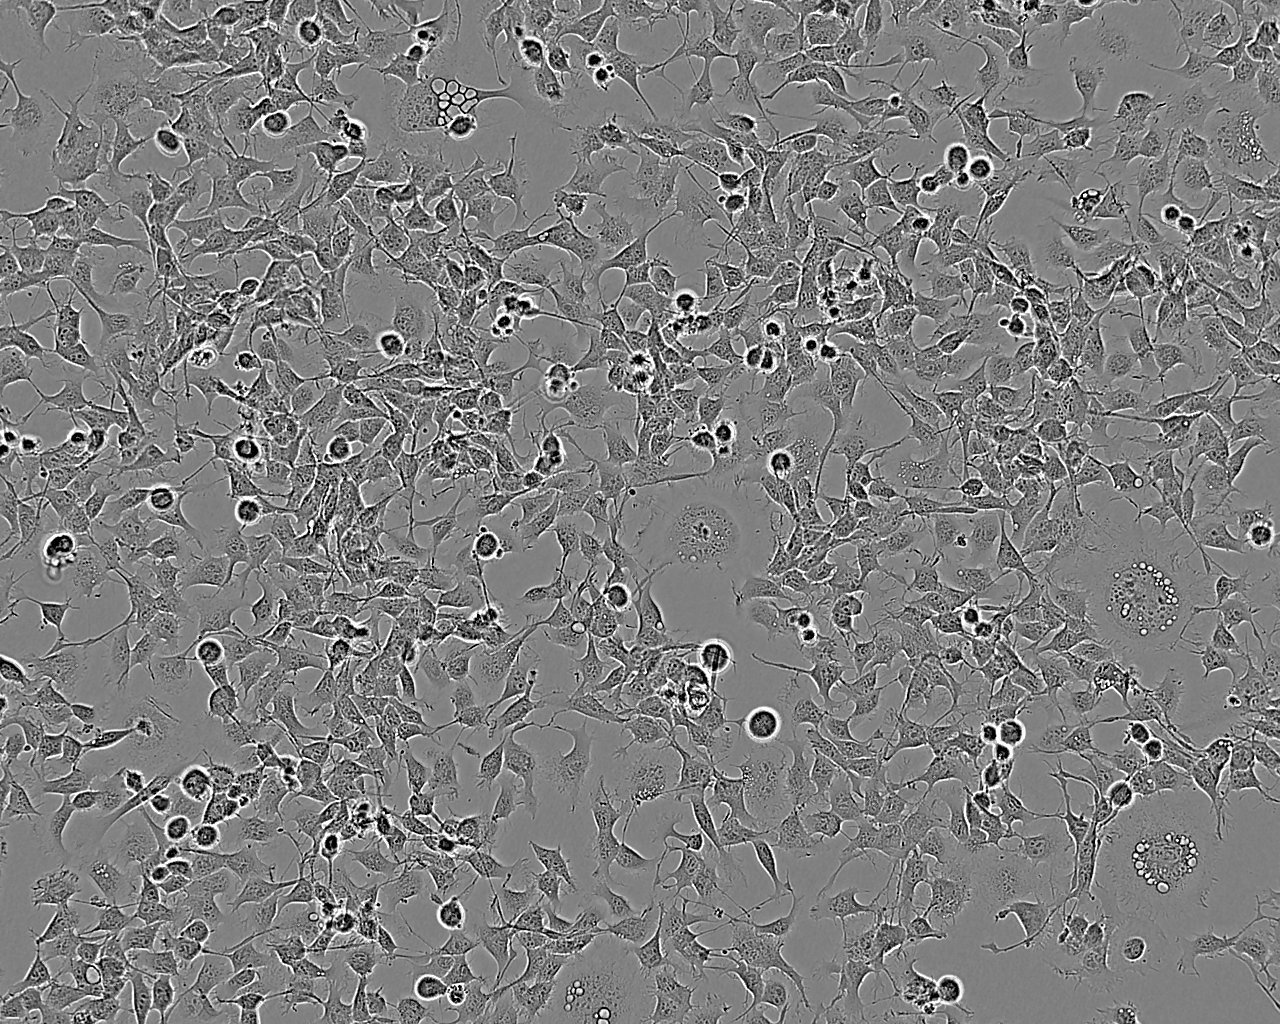 NCI-H650 epithelioid cells人非小细胞肺癌细胞系